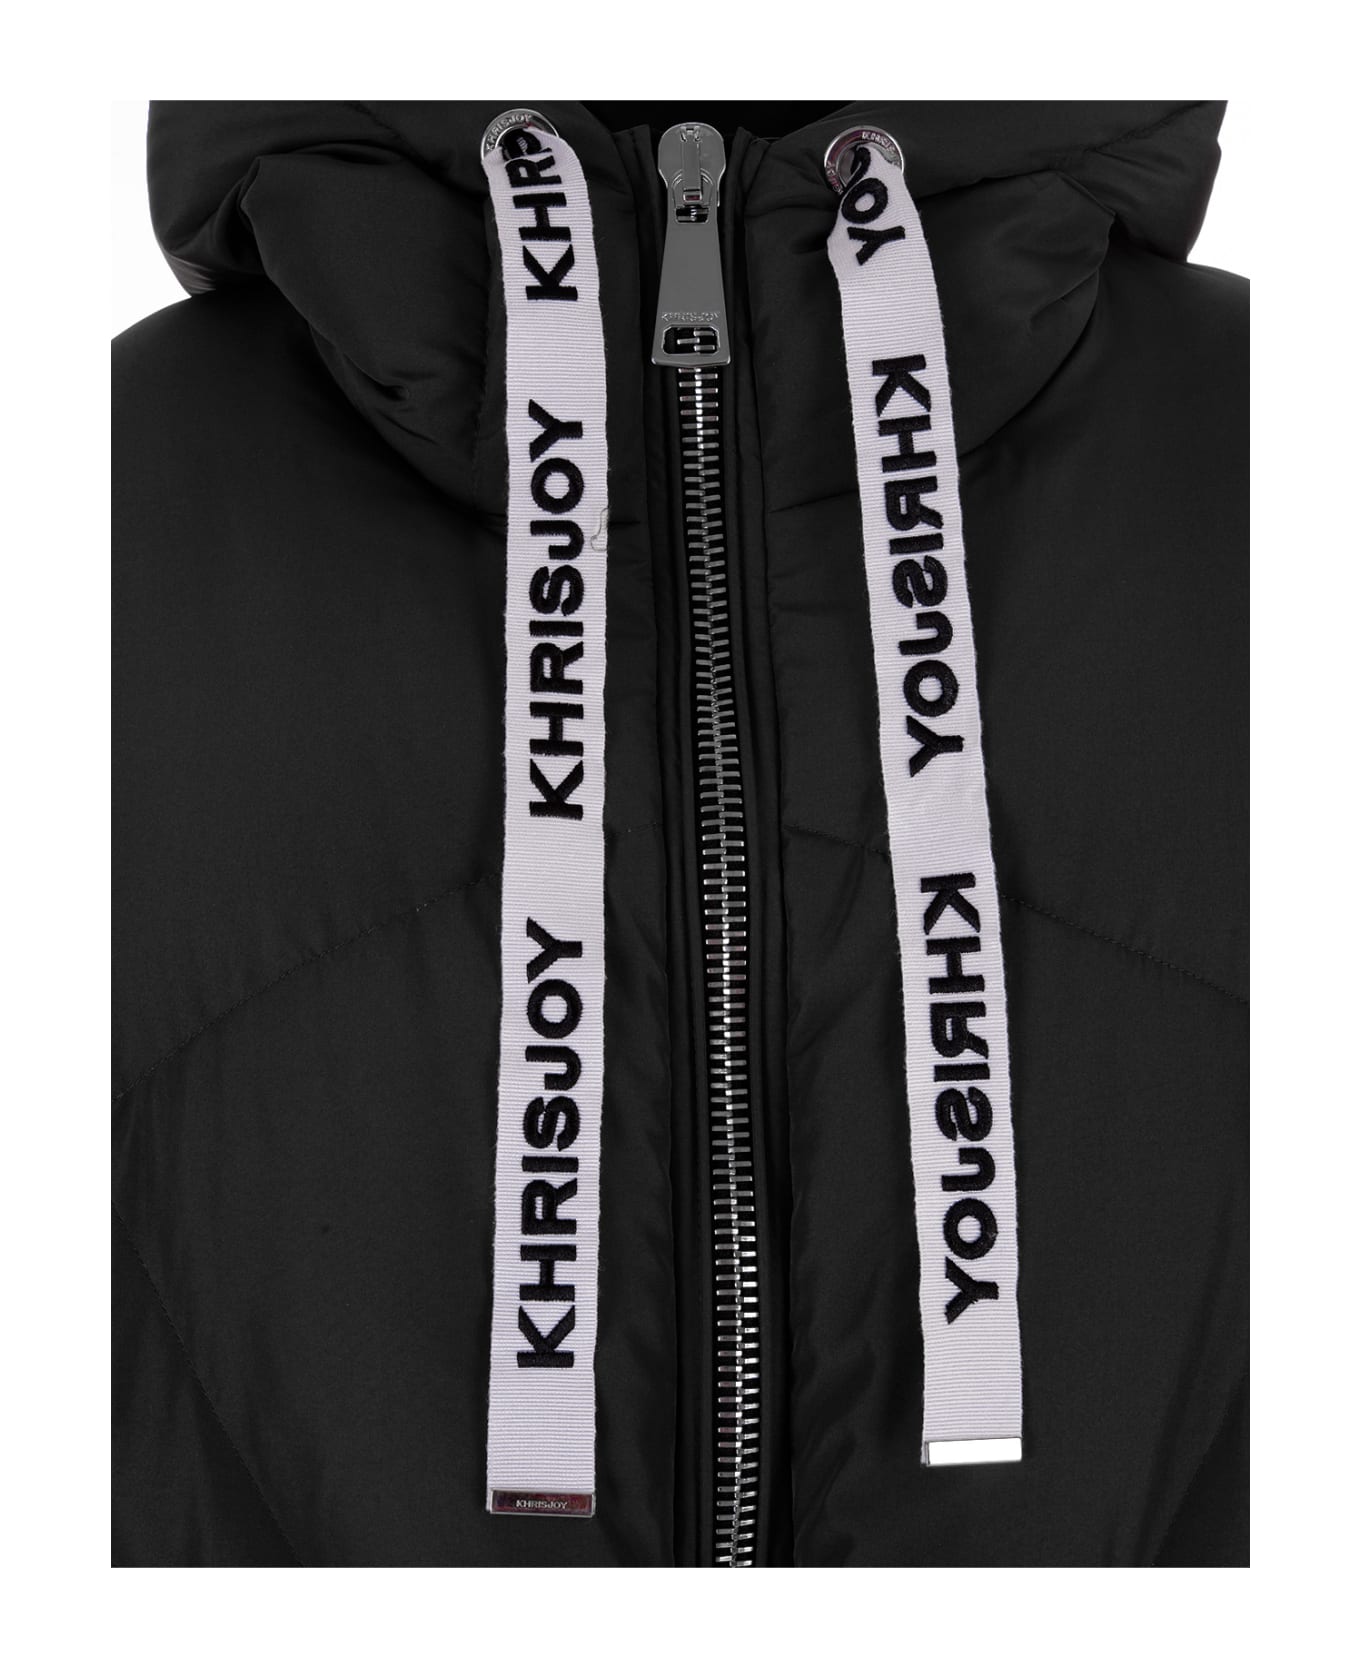 Khrisjoy Black Khris Iconic Puffer Jacket - Black